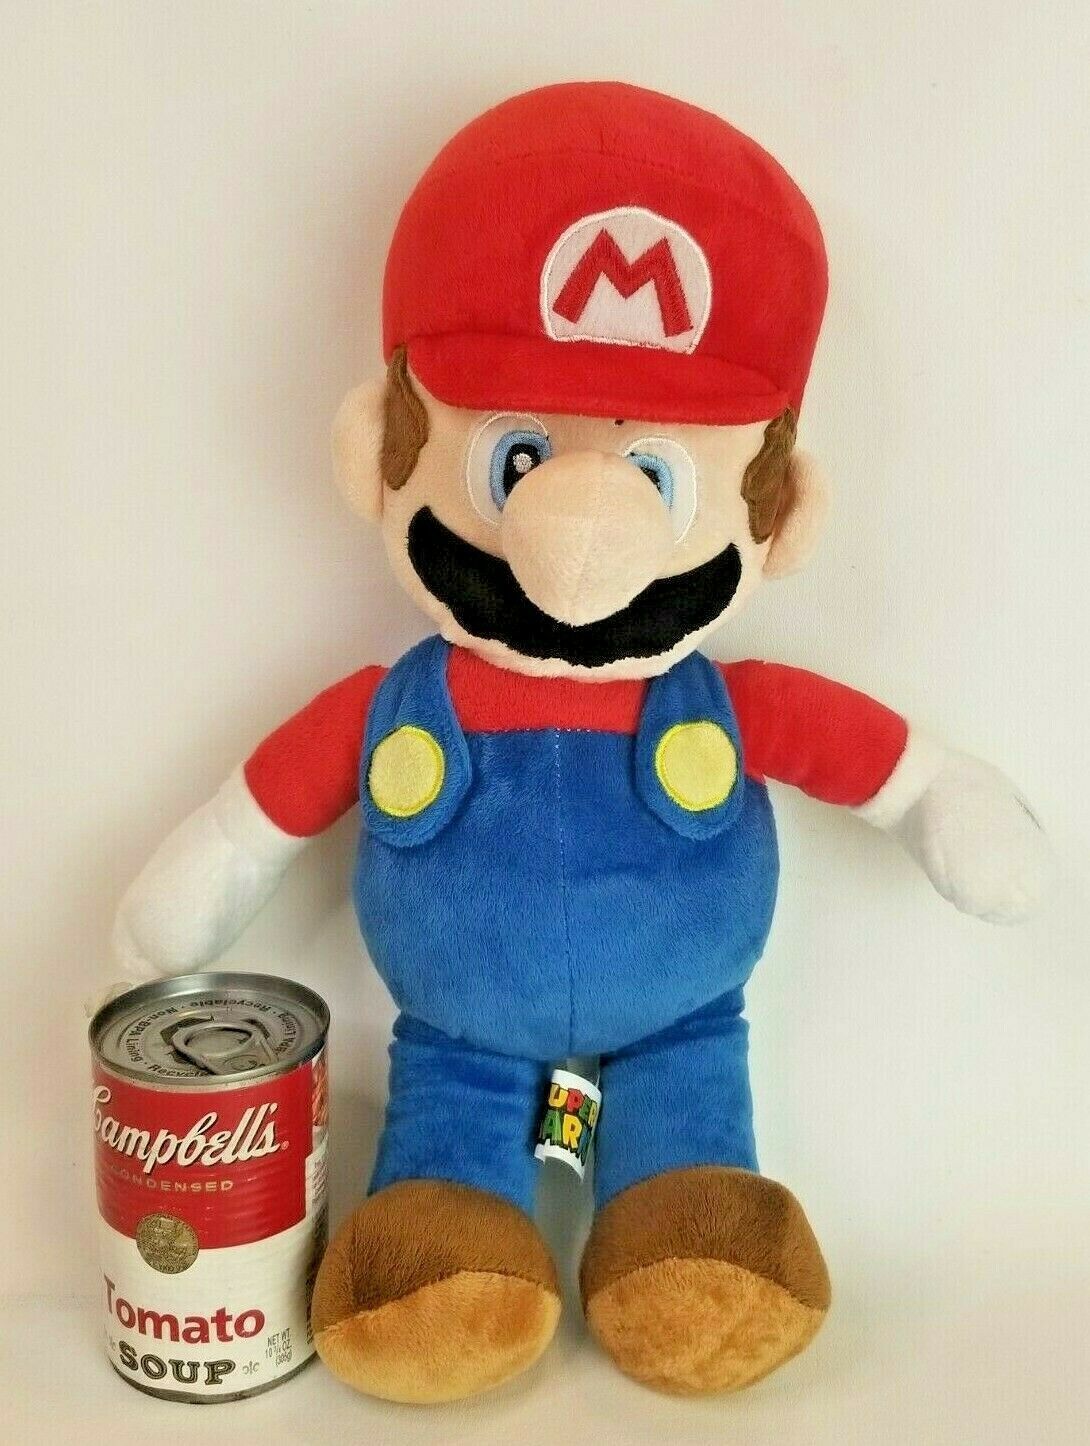 Nintendo Super Mario Bros MARIO 16in Plush Stuffed Toy Doll 2016 - $14.80